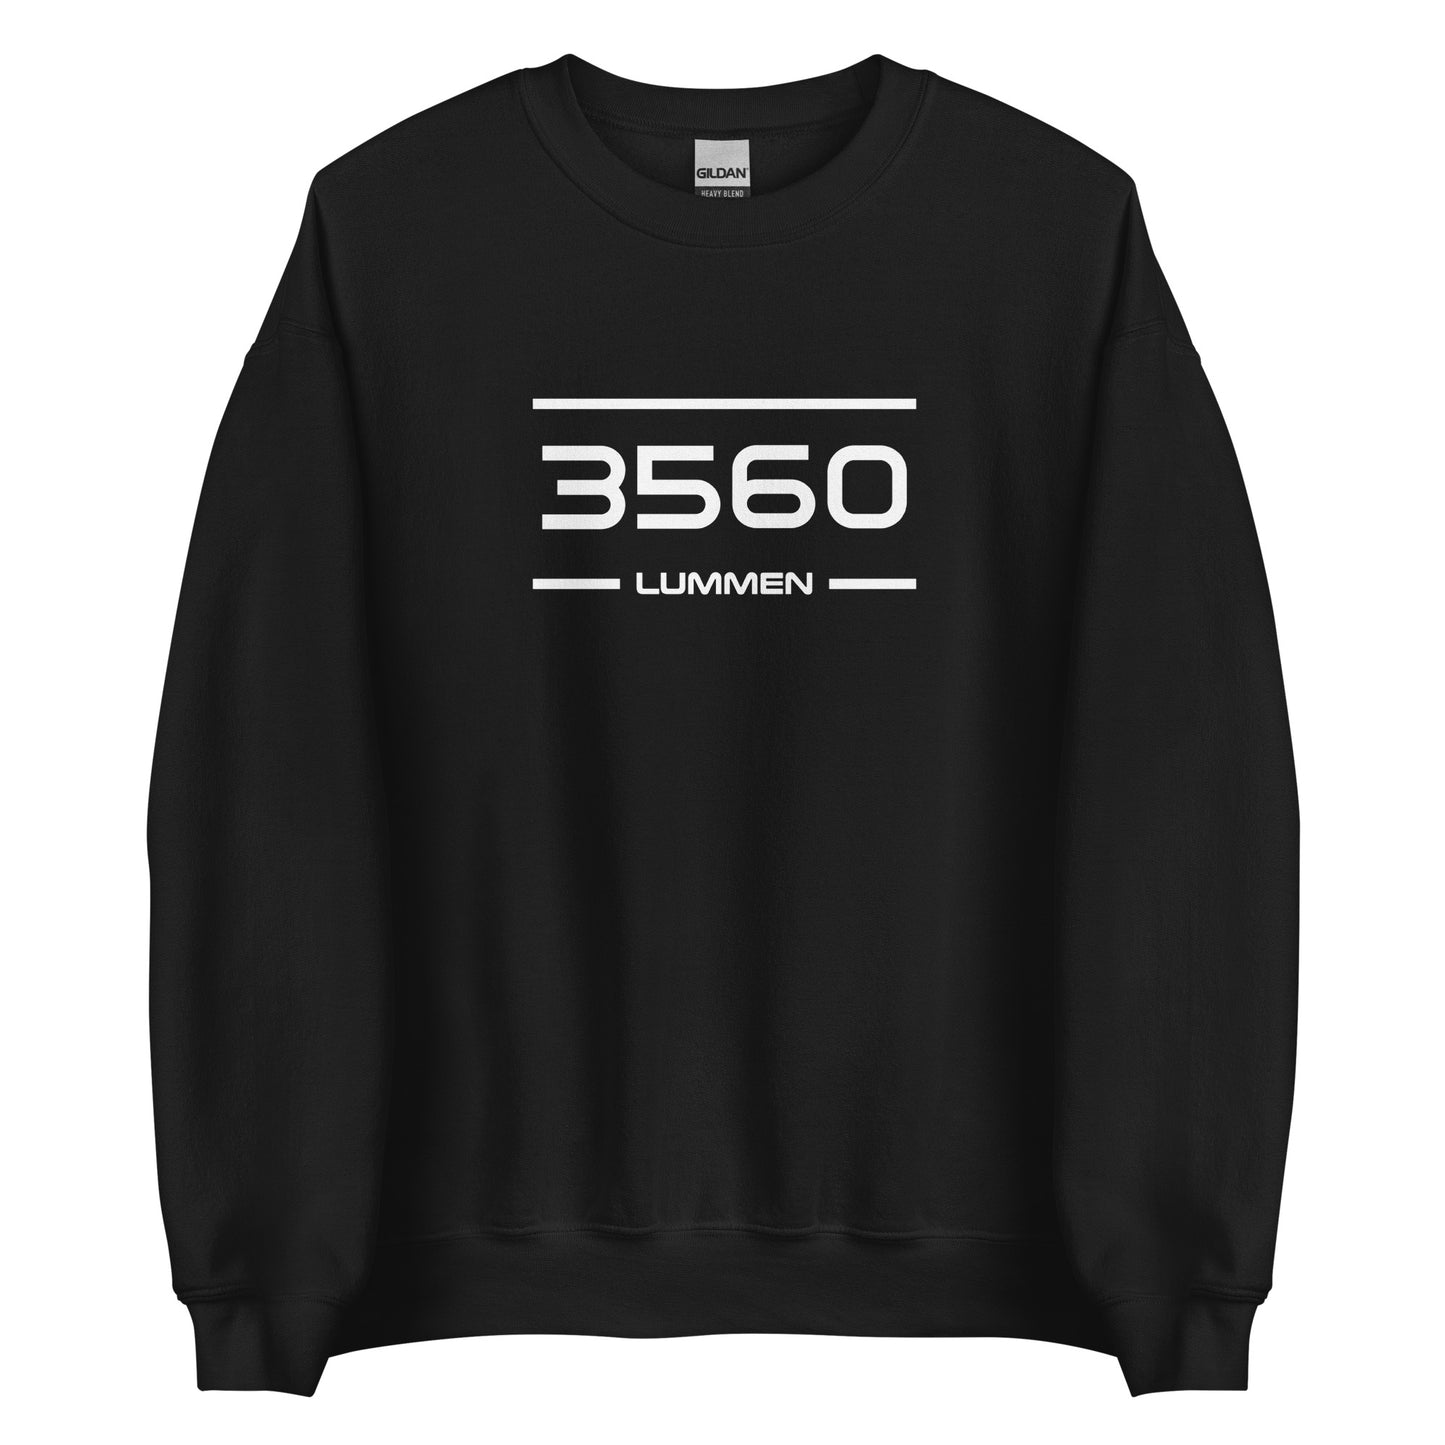 Sweater - 3560 - Lummen (M/V)